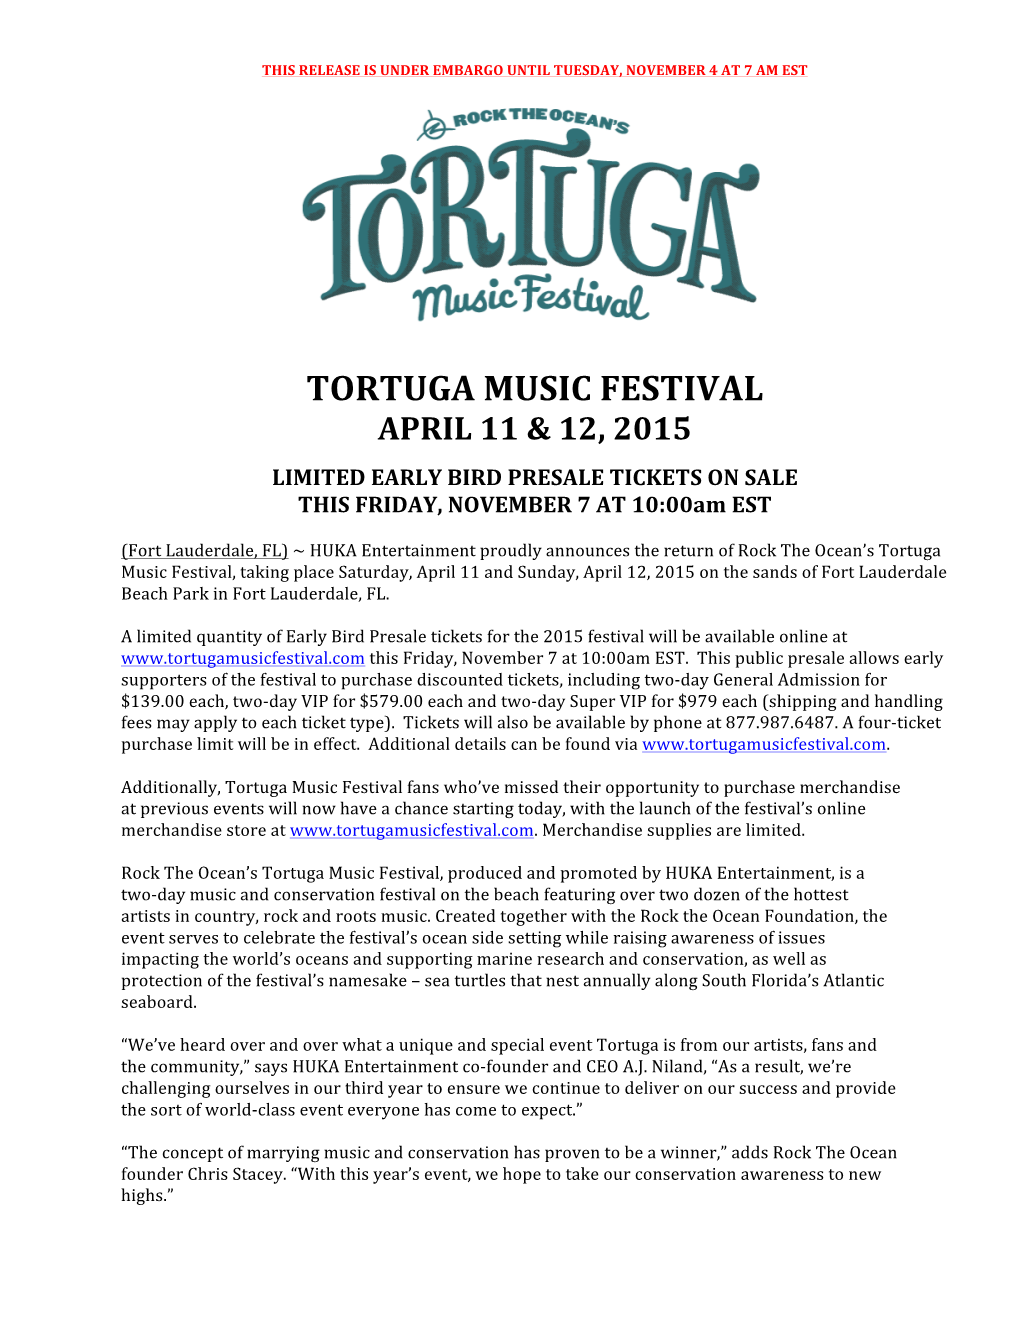 Tortuga Music Festival April 11 & 12, 2015